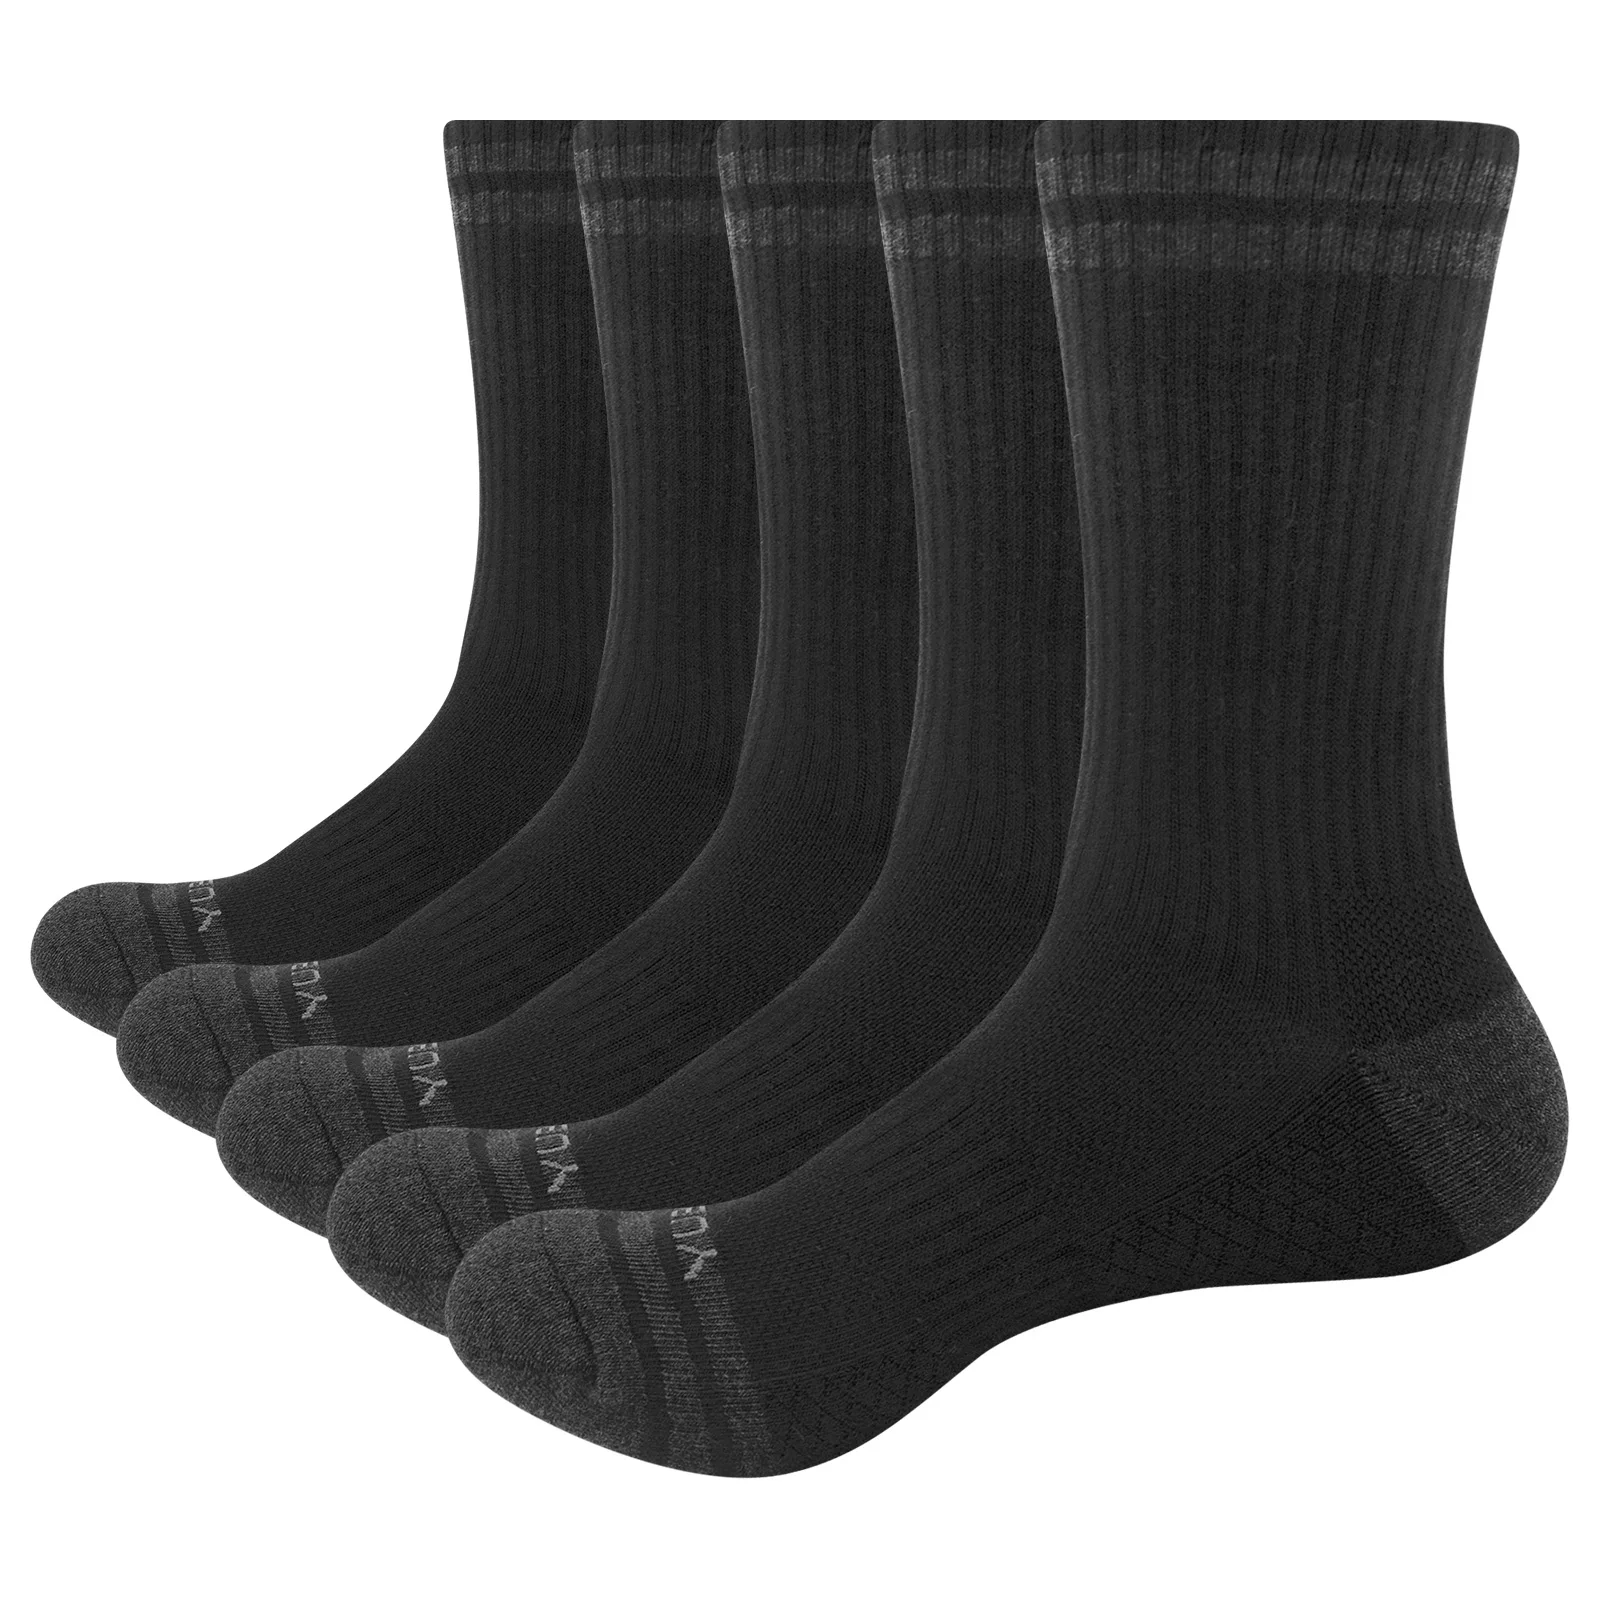 YUEDGE 5 Pairs Men's Black Cotton Crew Moisture Wick Breathable Cushion Work Casual Socks For Men Size 38-46 EU